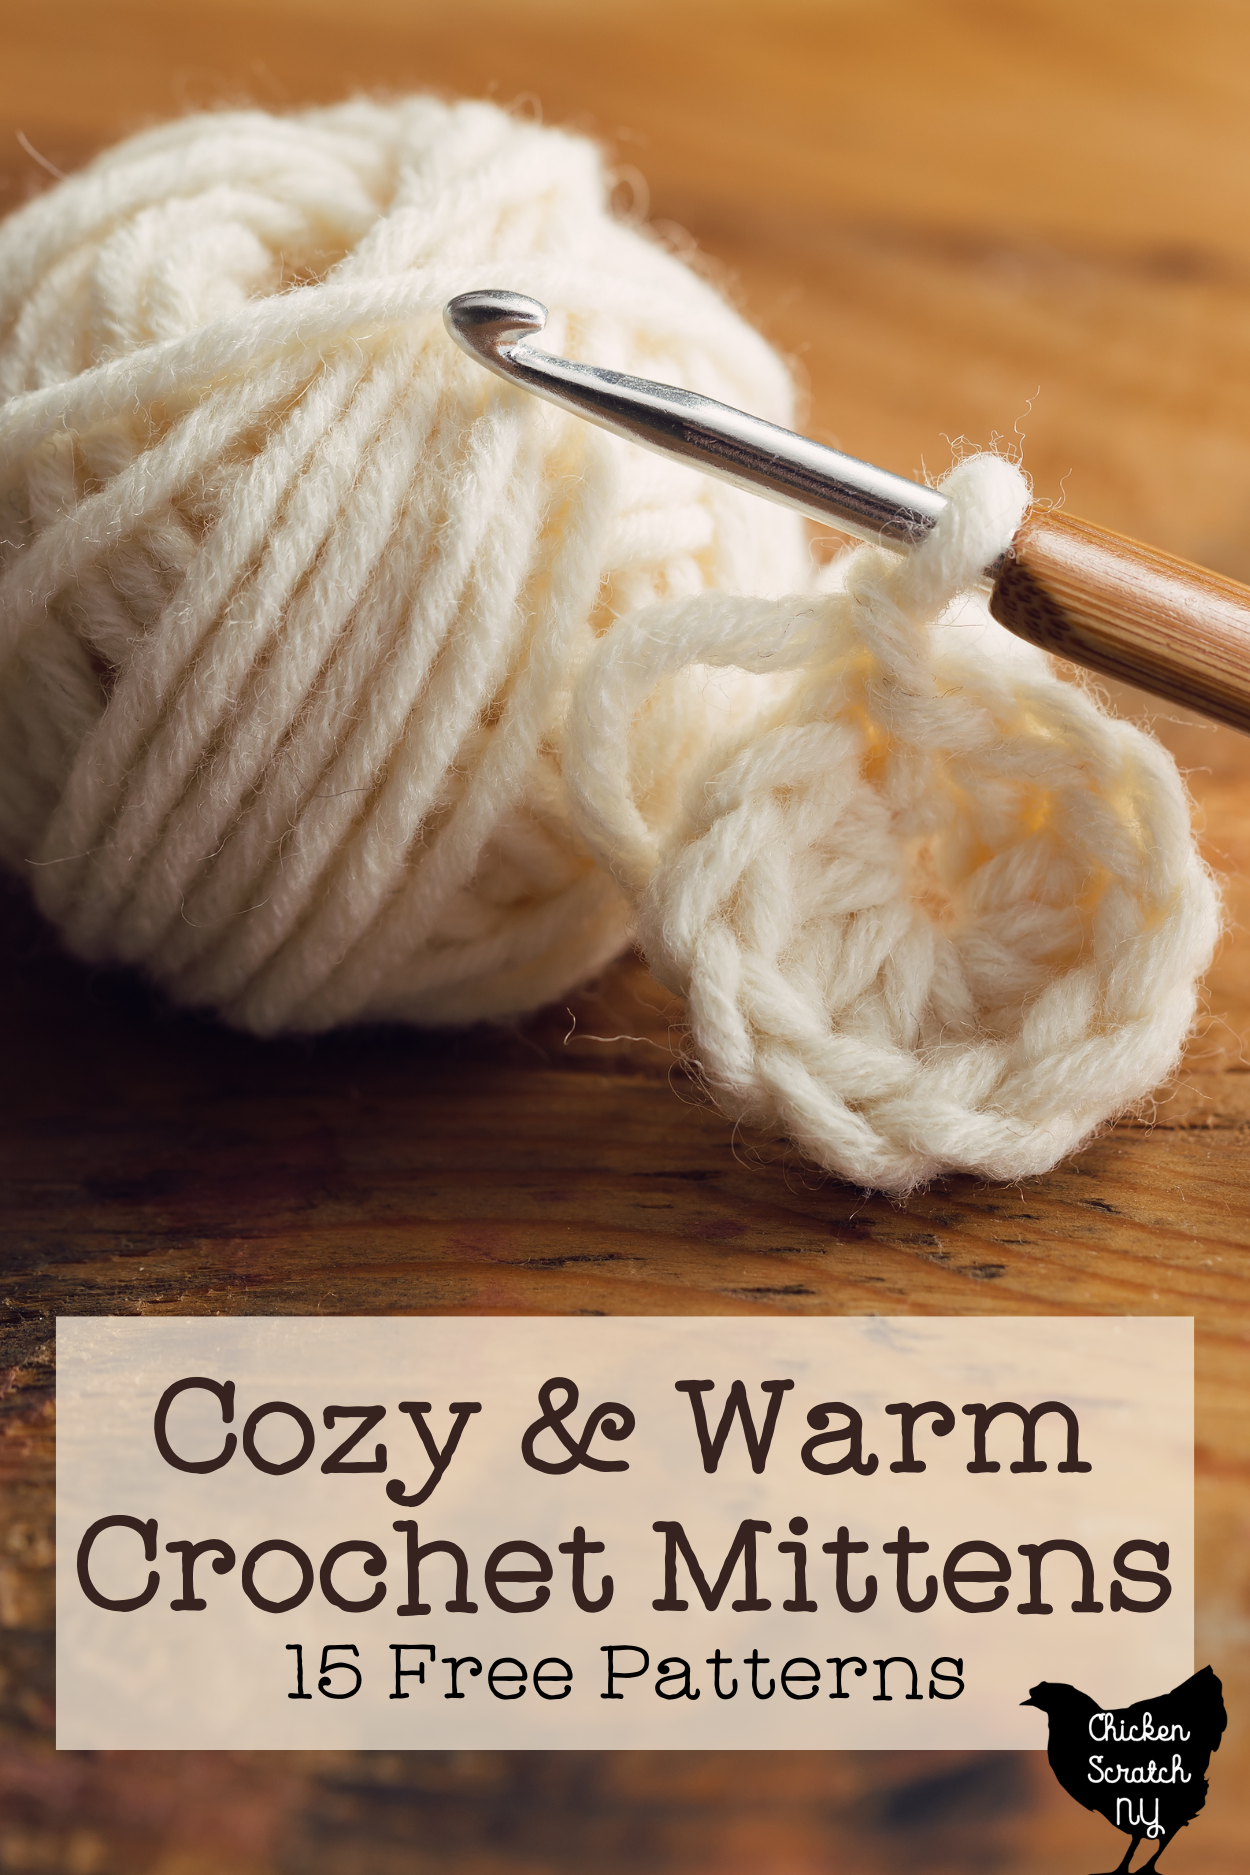  Beige Chenille Chunky Yarn 250g/0.55lb Hand Knitting